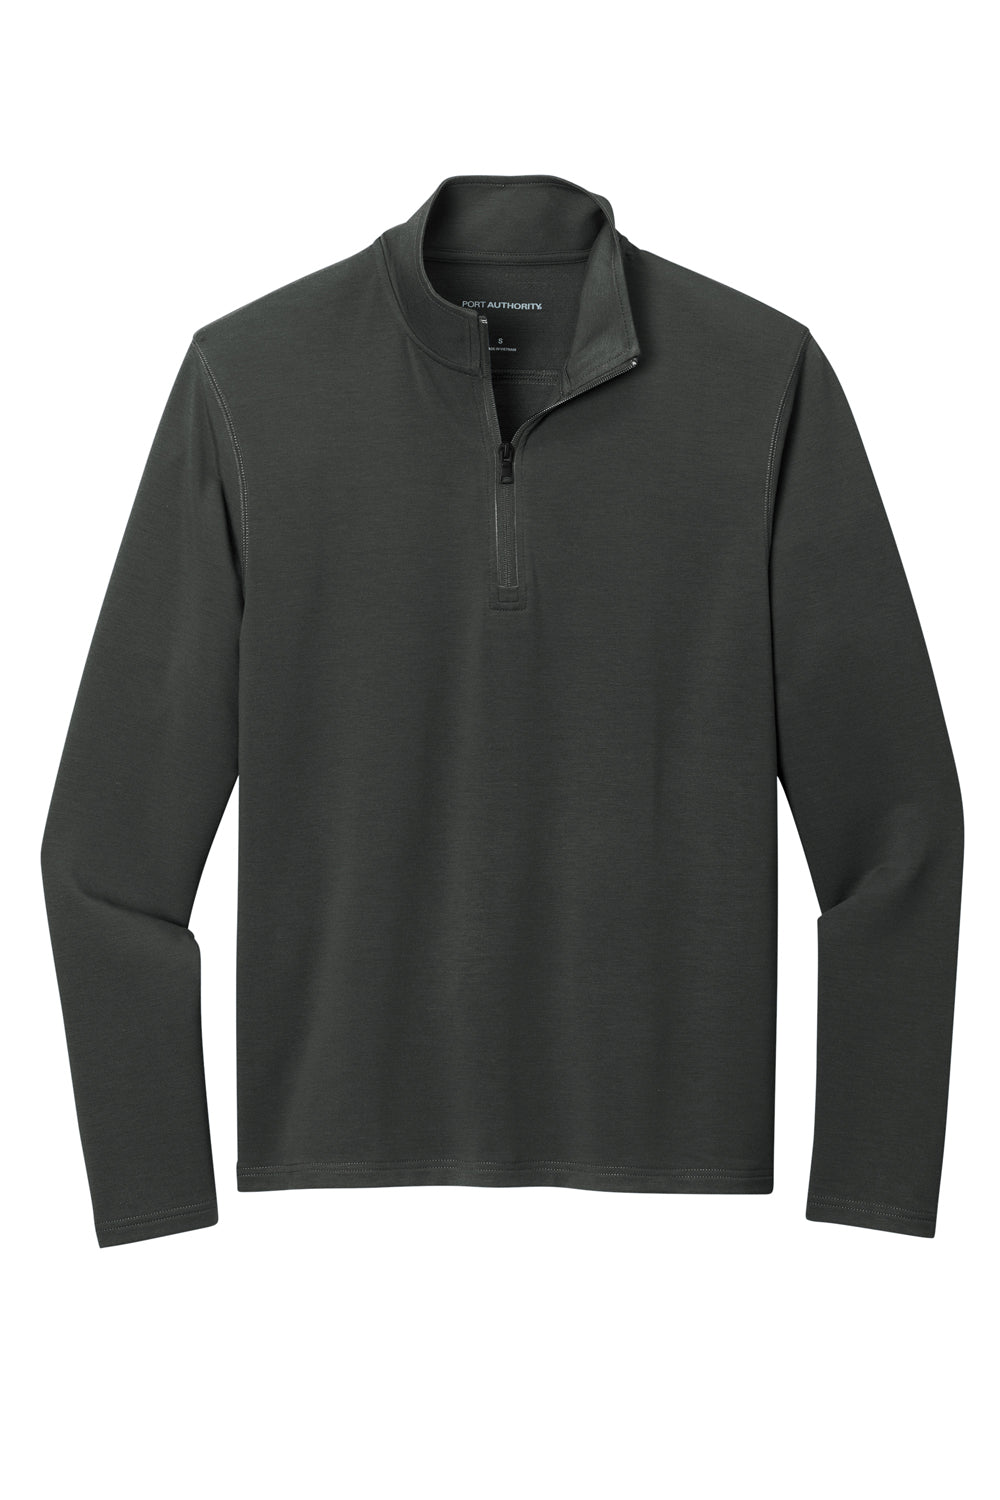 Port Authority K825 Microterry 1/4 Zip Sweatshirt Charcoal Grey Flat Front